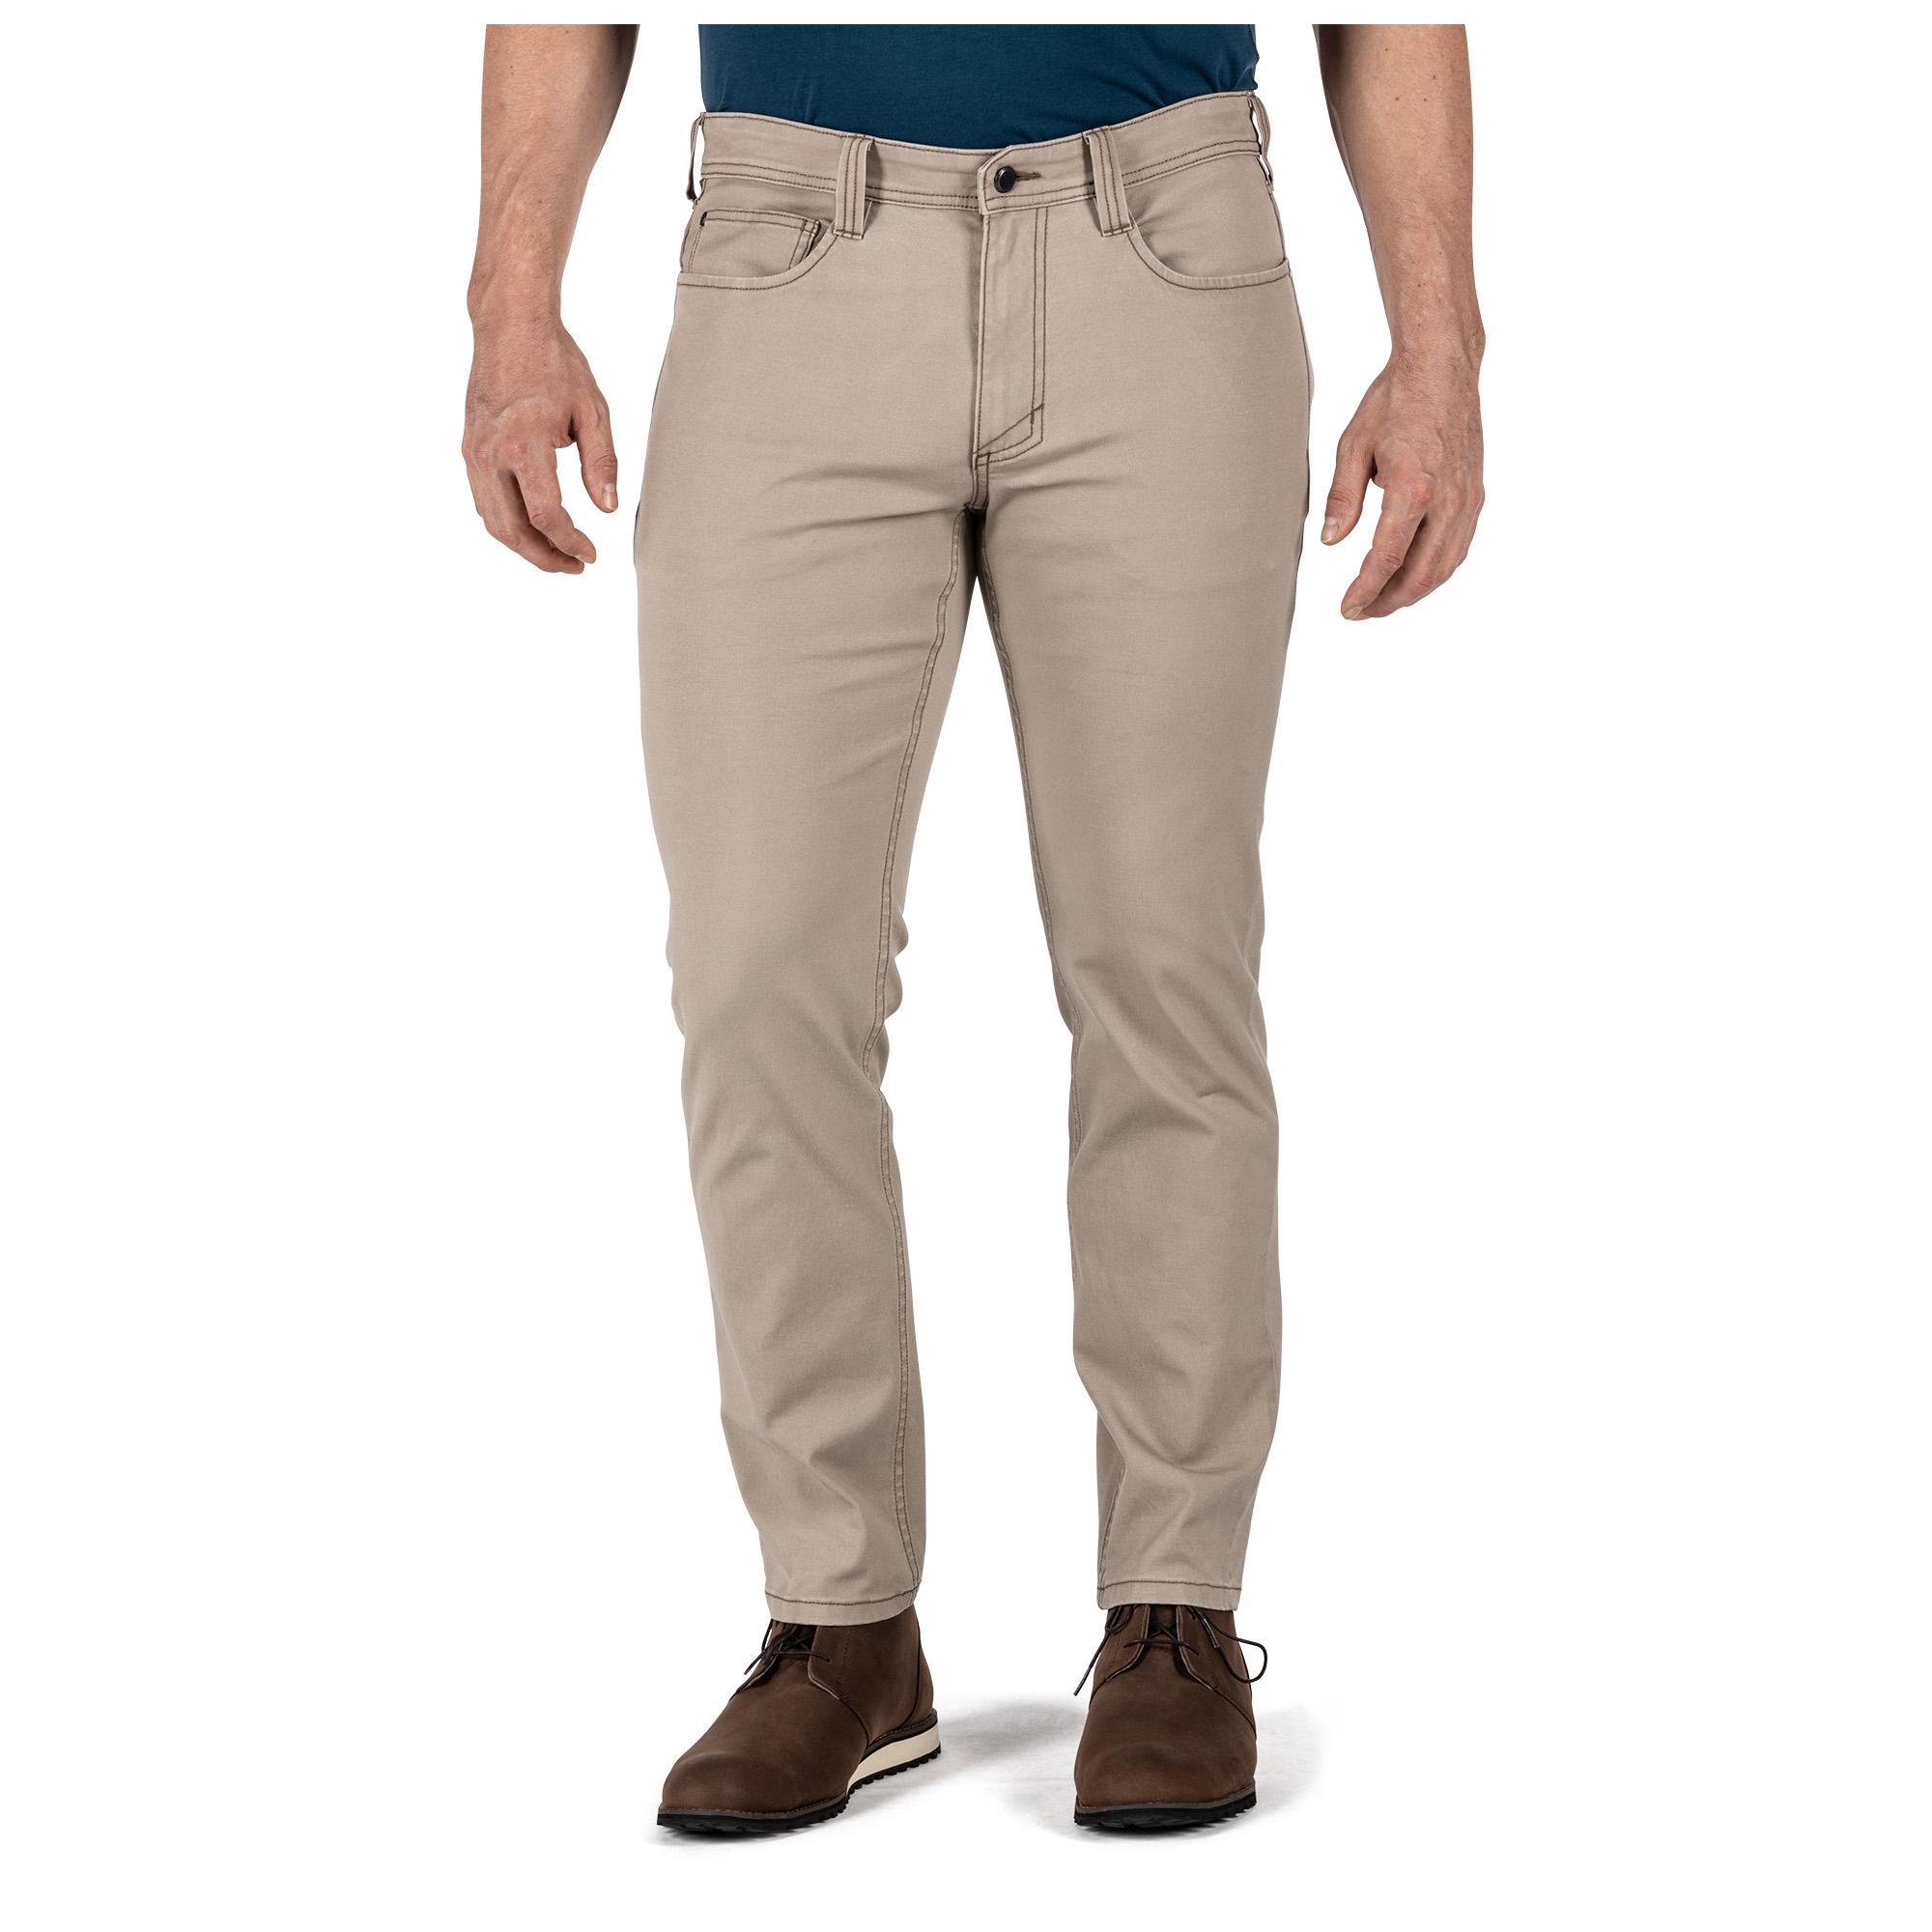 Defender-flex range pant - Pants & shorts